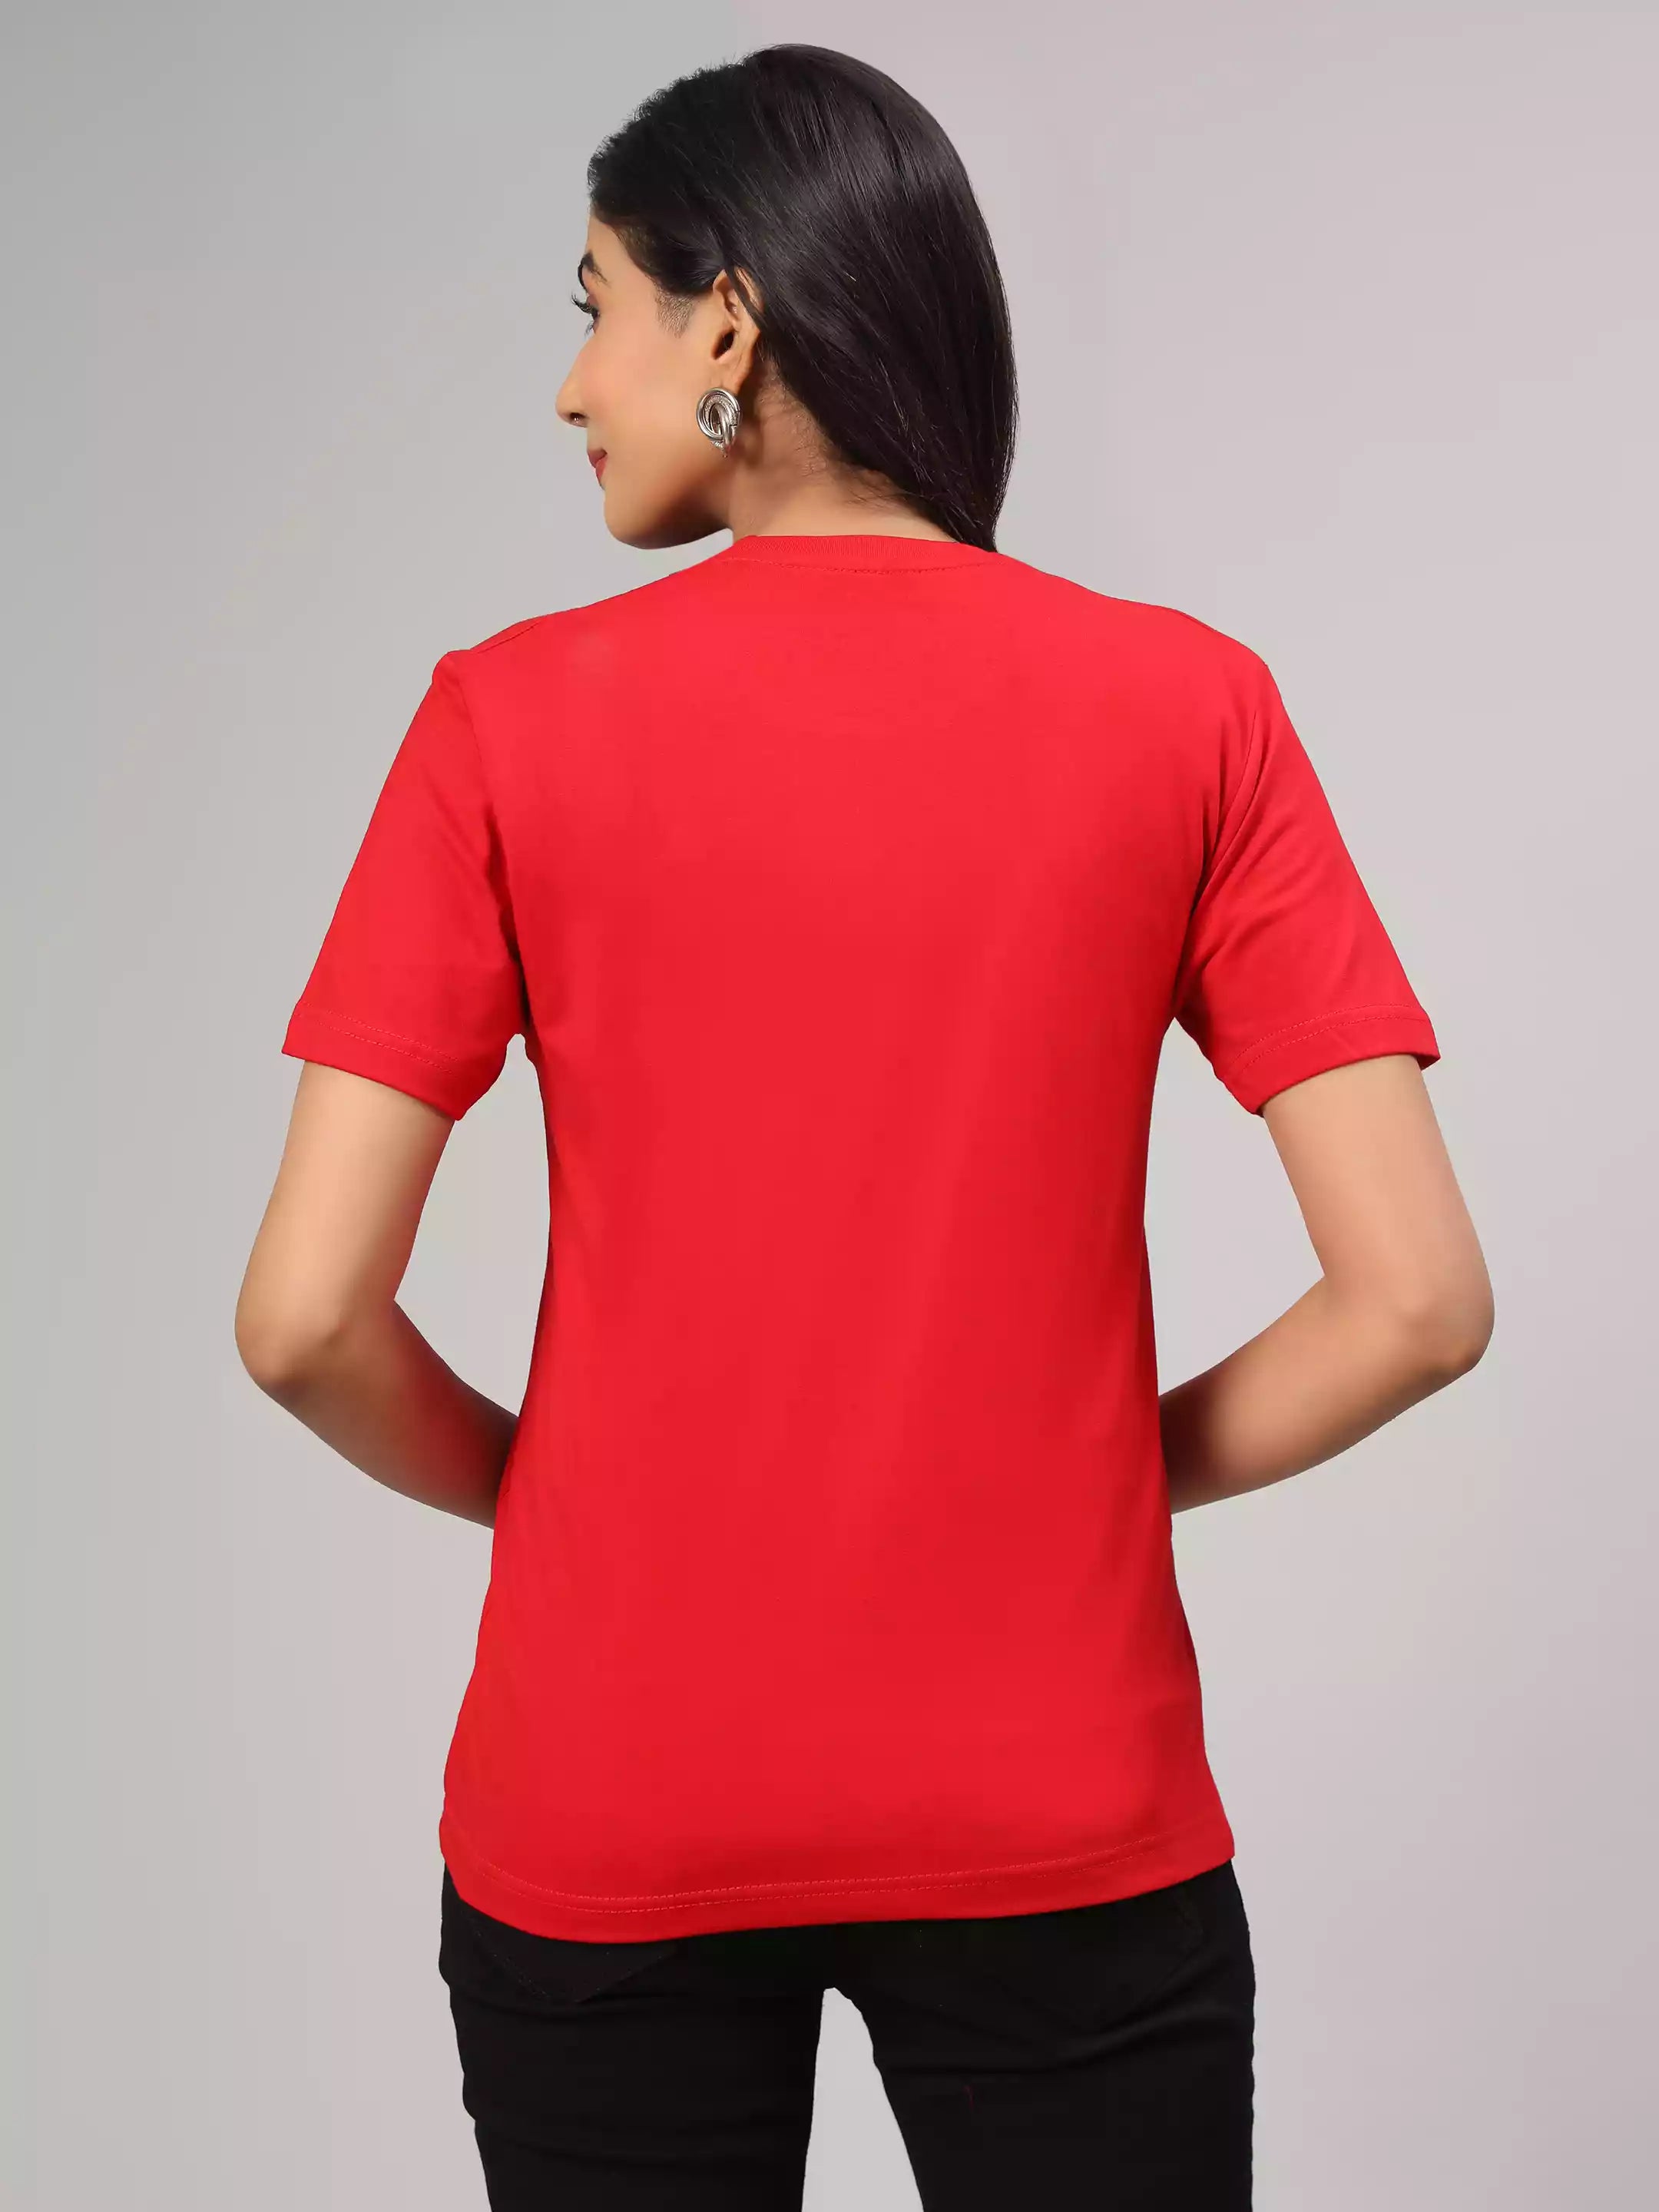 Malvan - Sukhiaatma Unisex Graphic Printed Red T-shirt